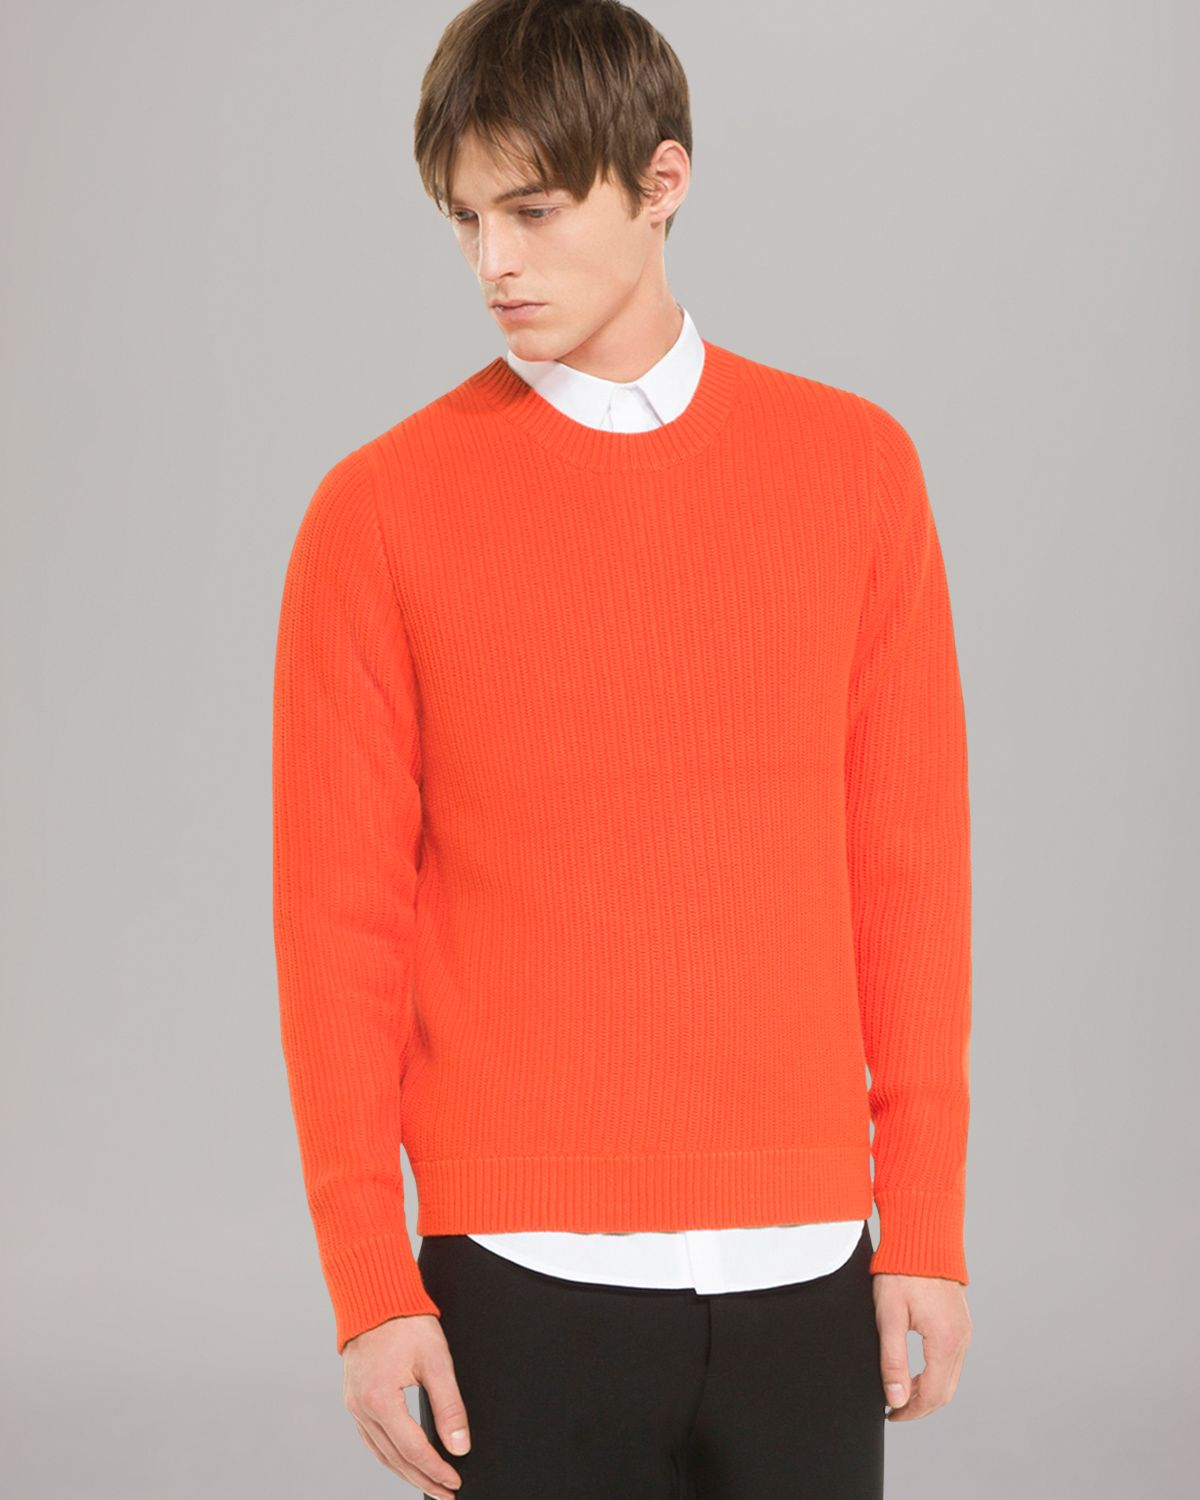 Lyst - Sandro Crewneck Sweater in Orange for Men